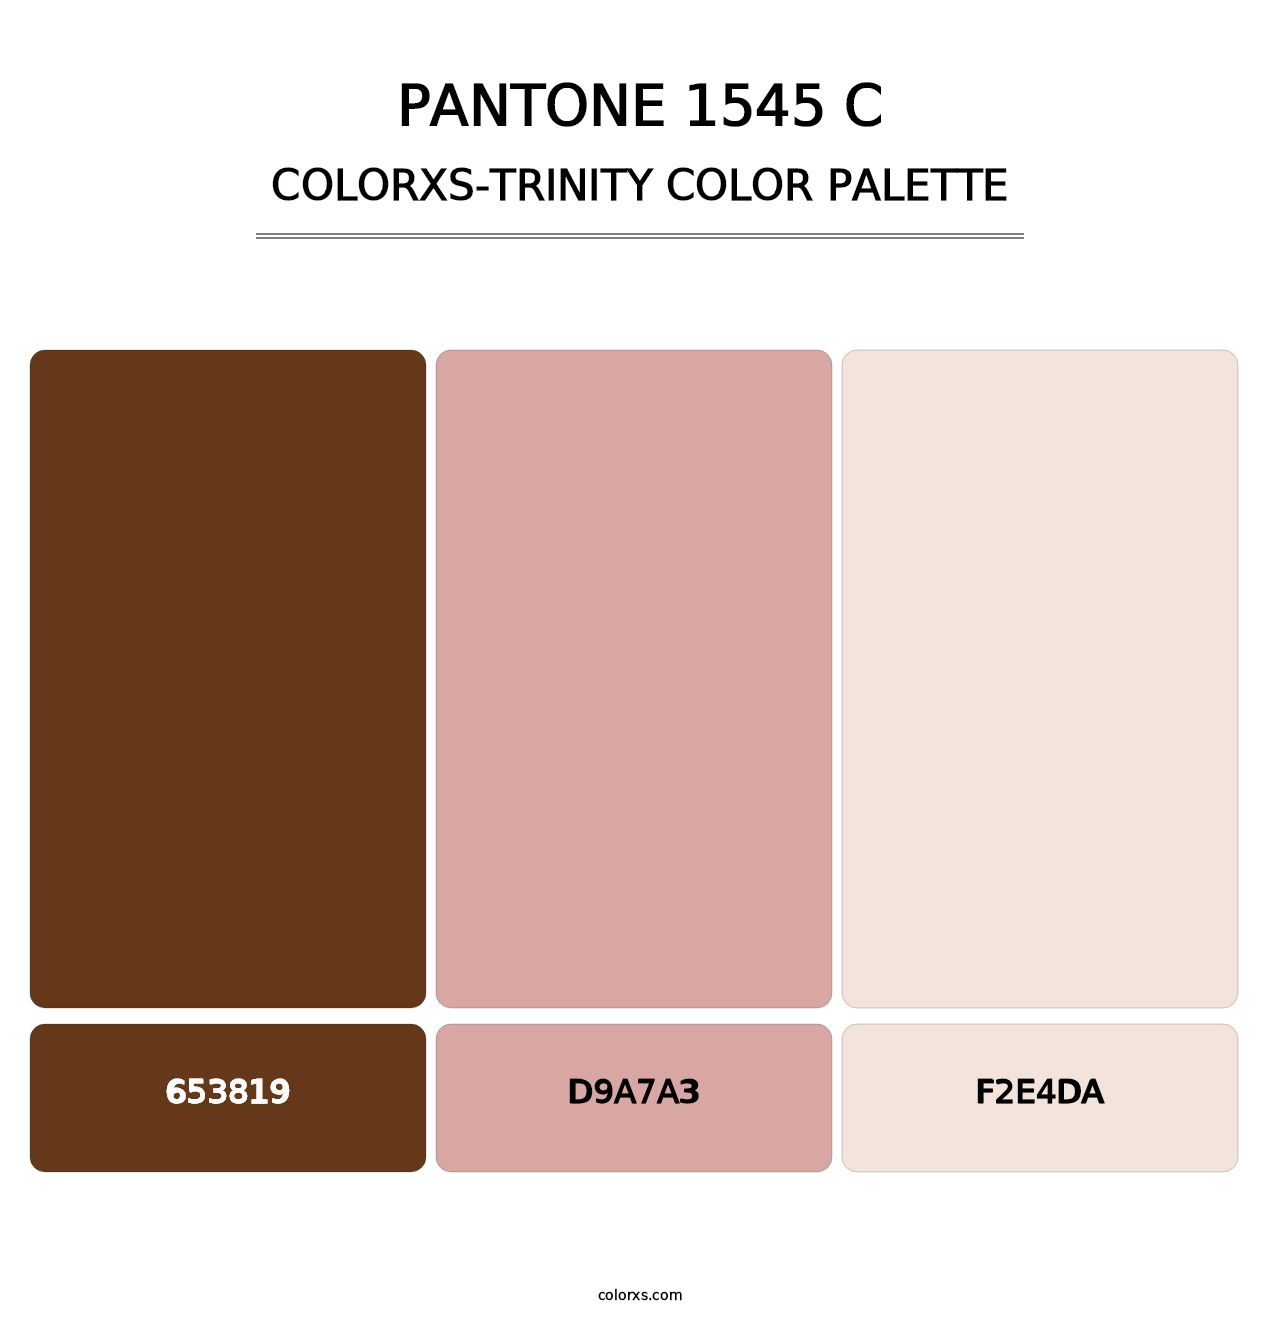 PANTONE 1545 C - Colorxs Trinity Palette